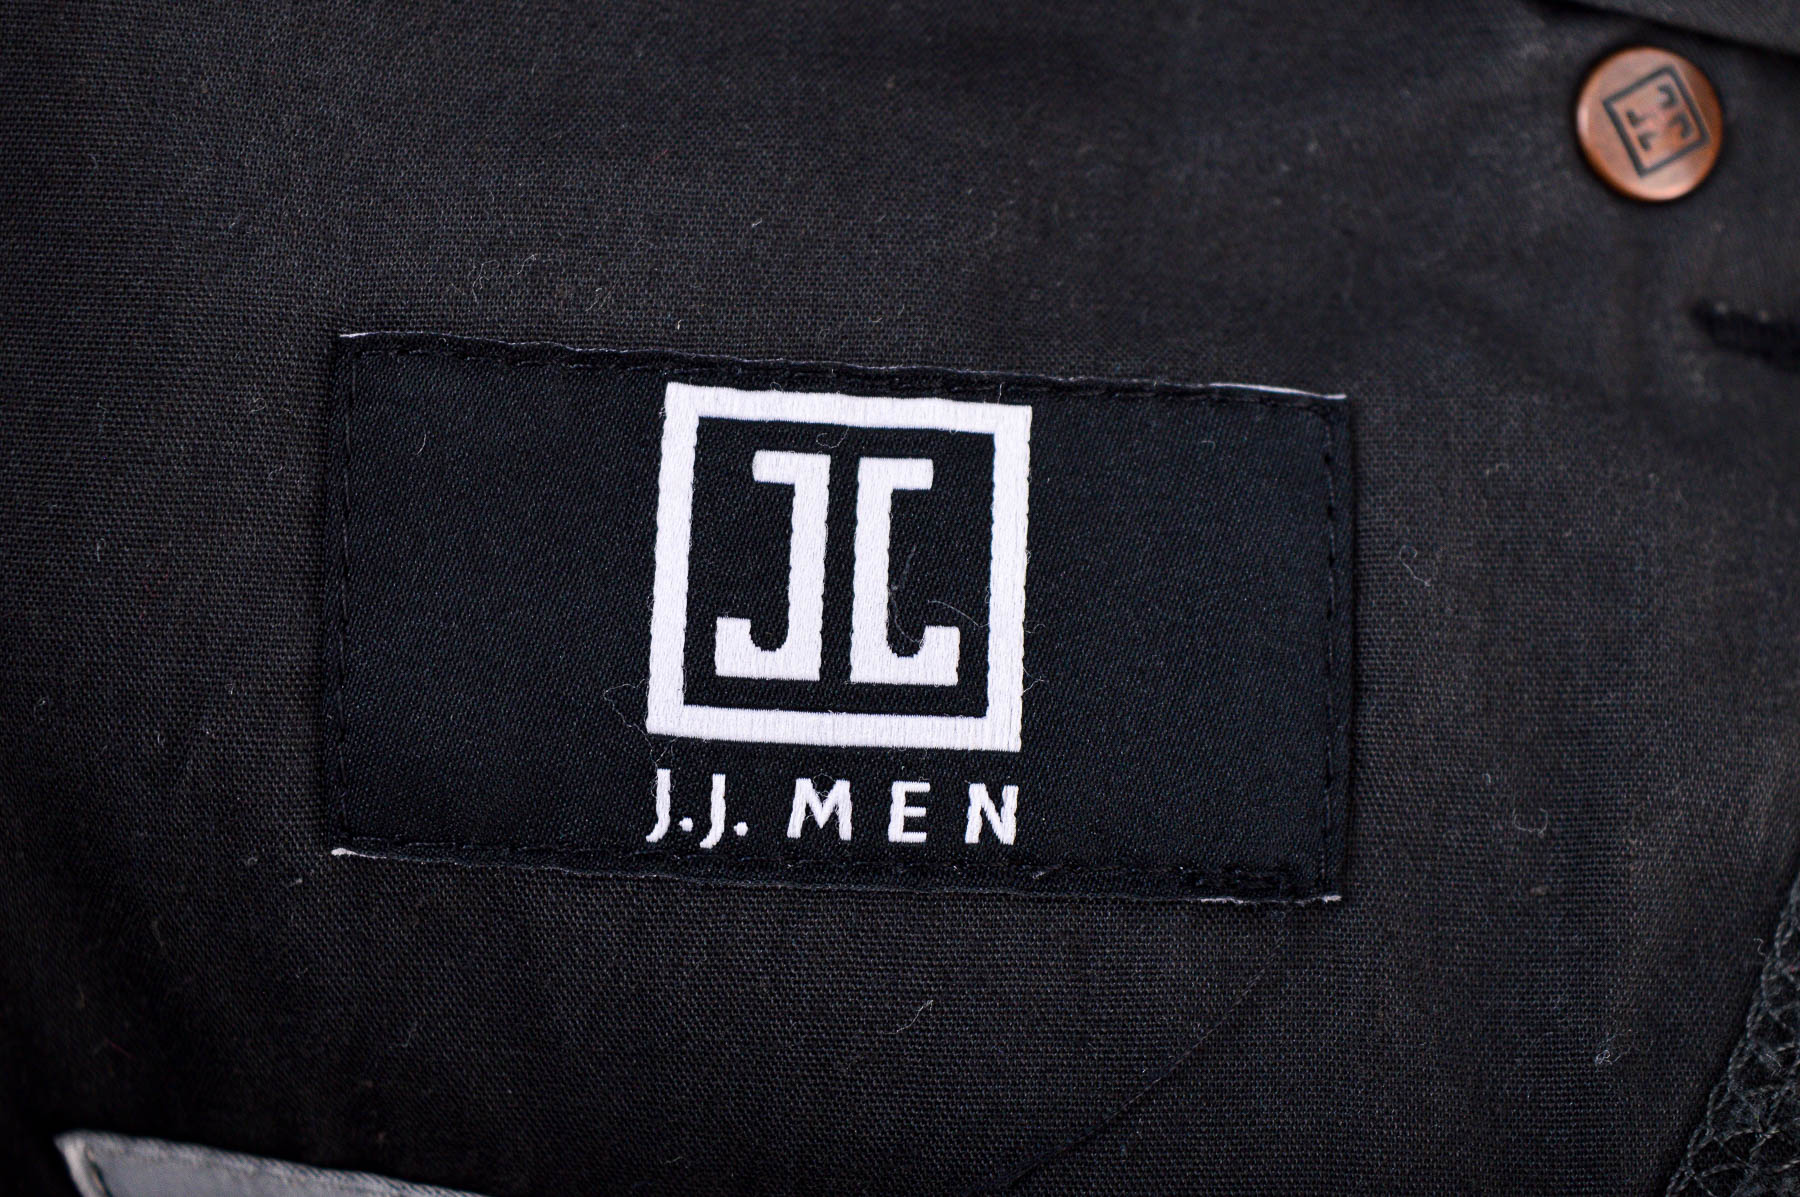 Men's jeans - J.J. Jette Joop - 2